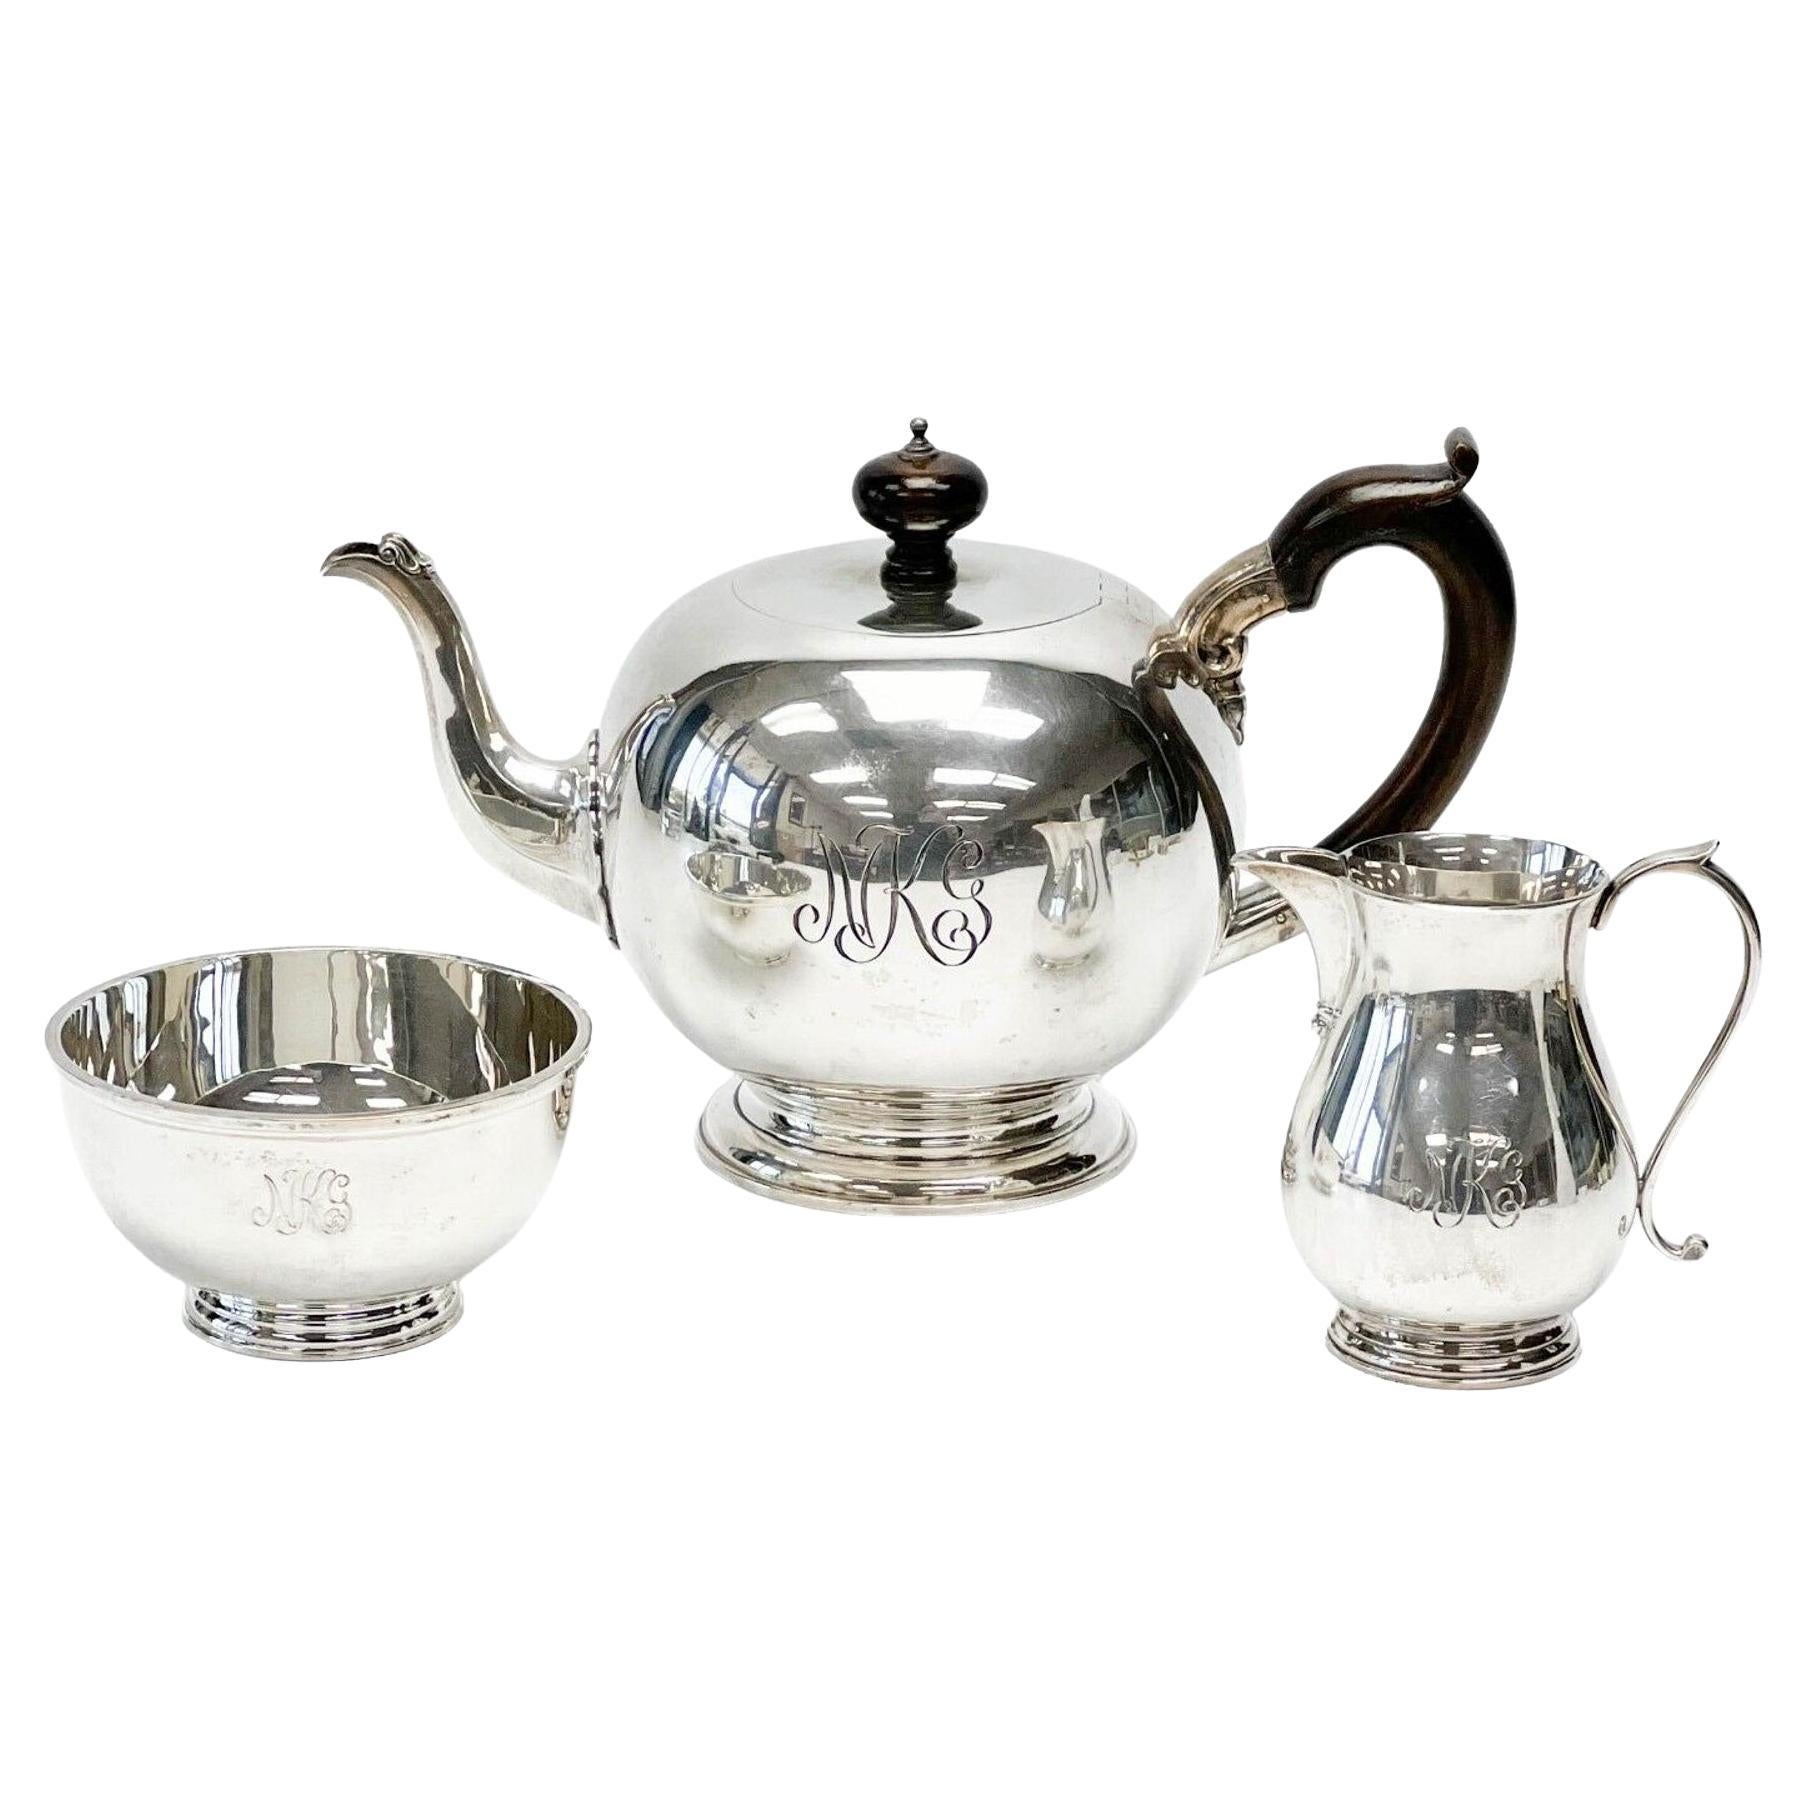 Asprey & Garrard England Sterling Silver Tea Set Teapot with Wood Handle